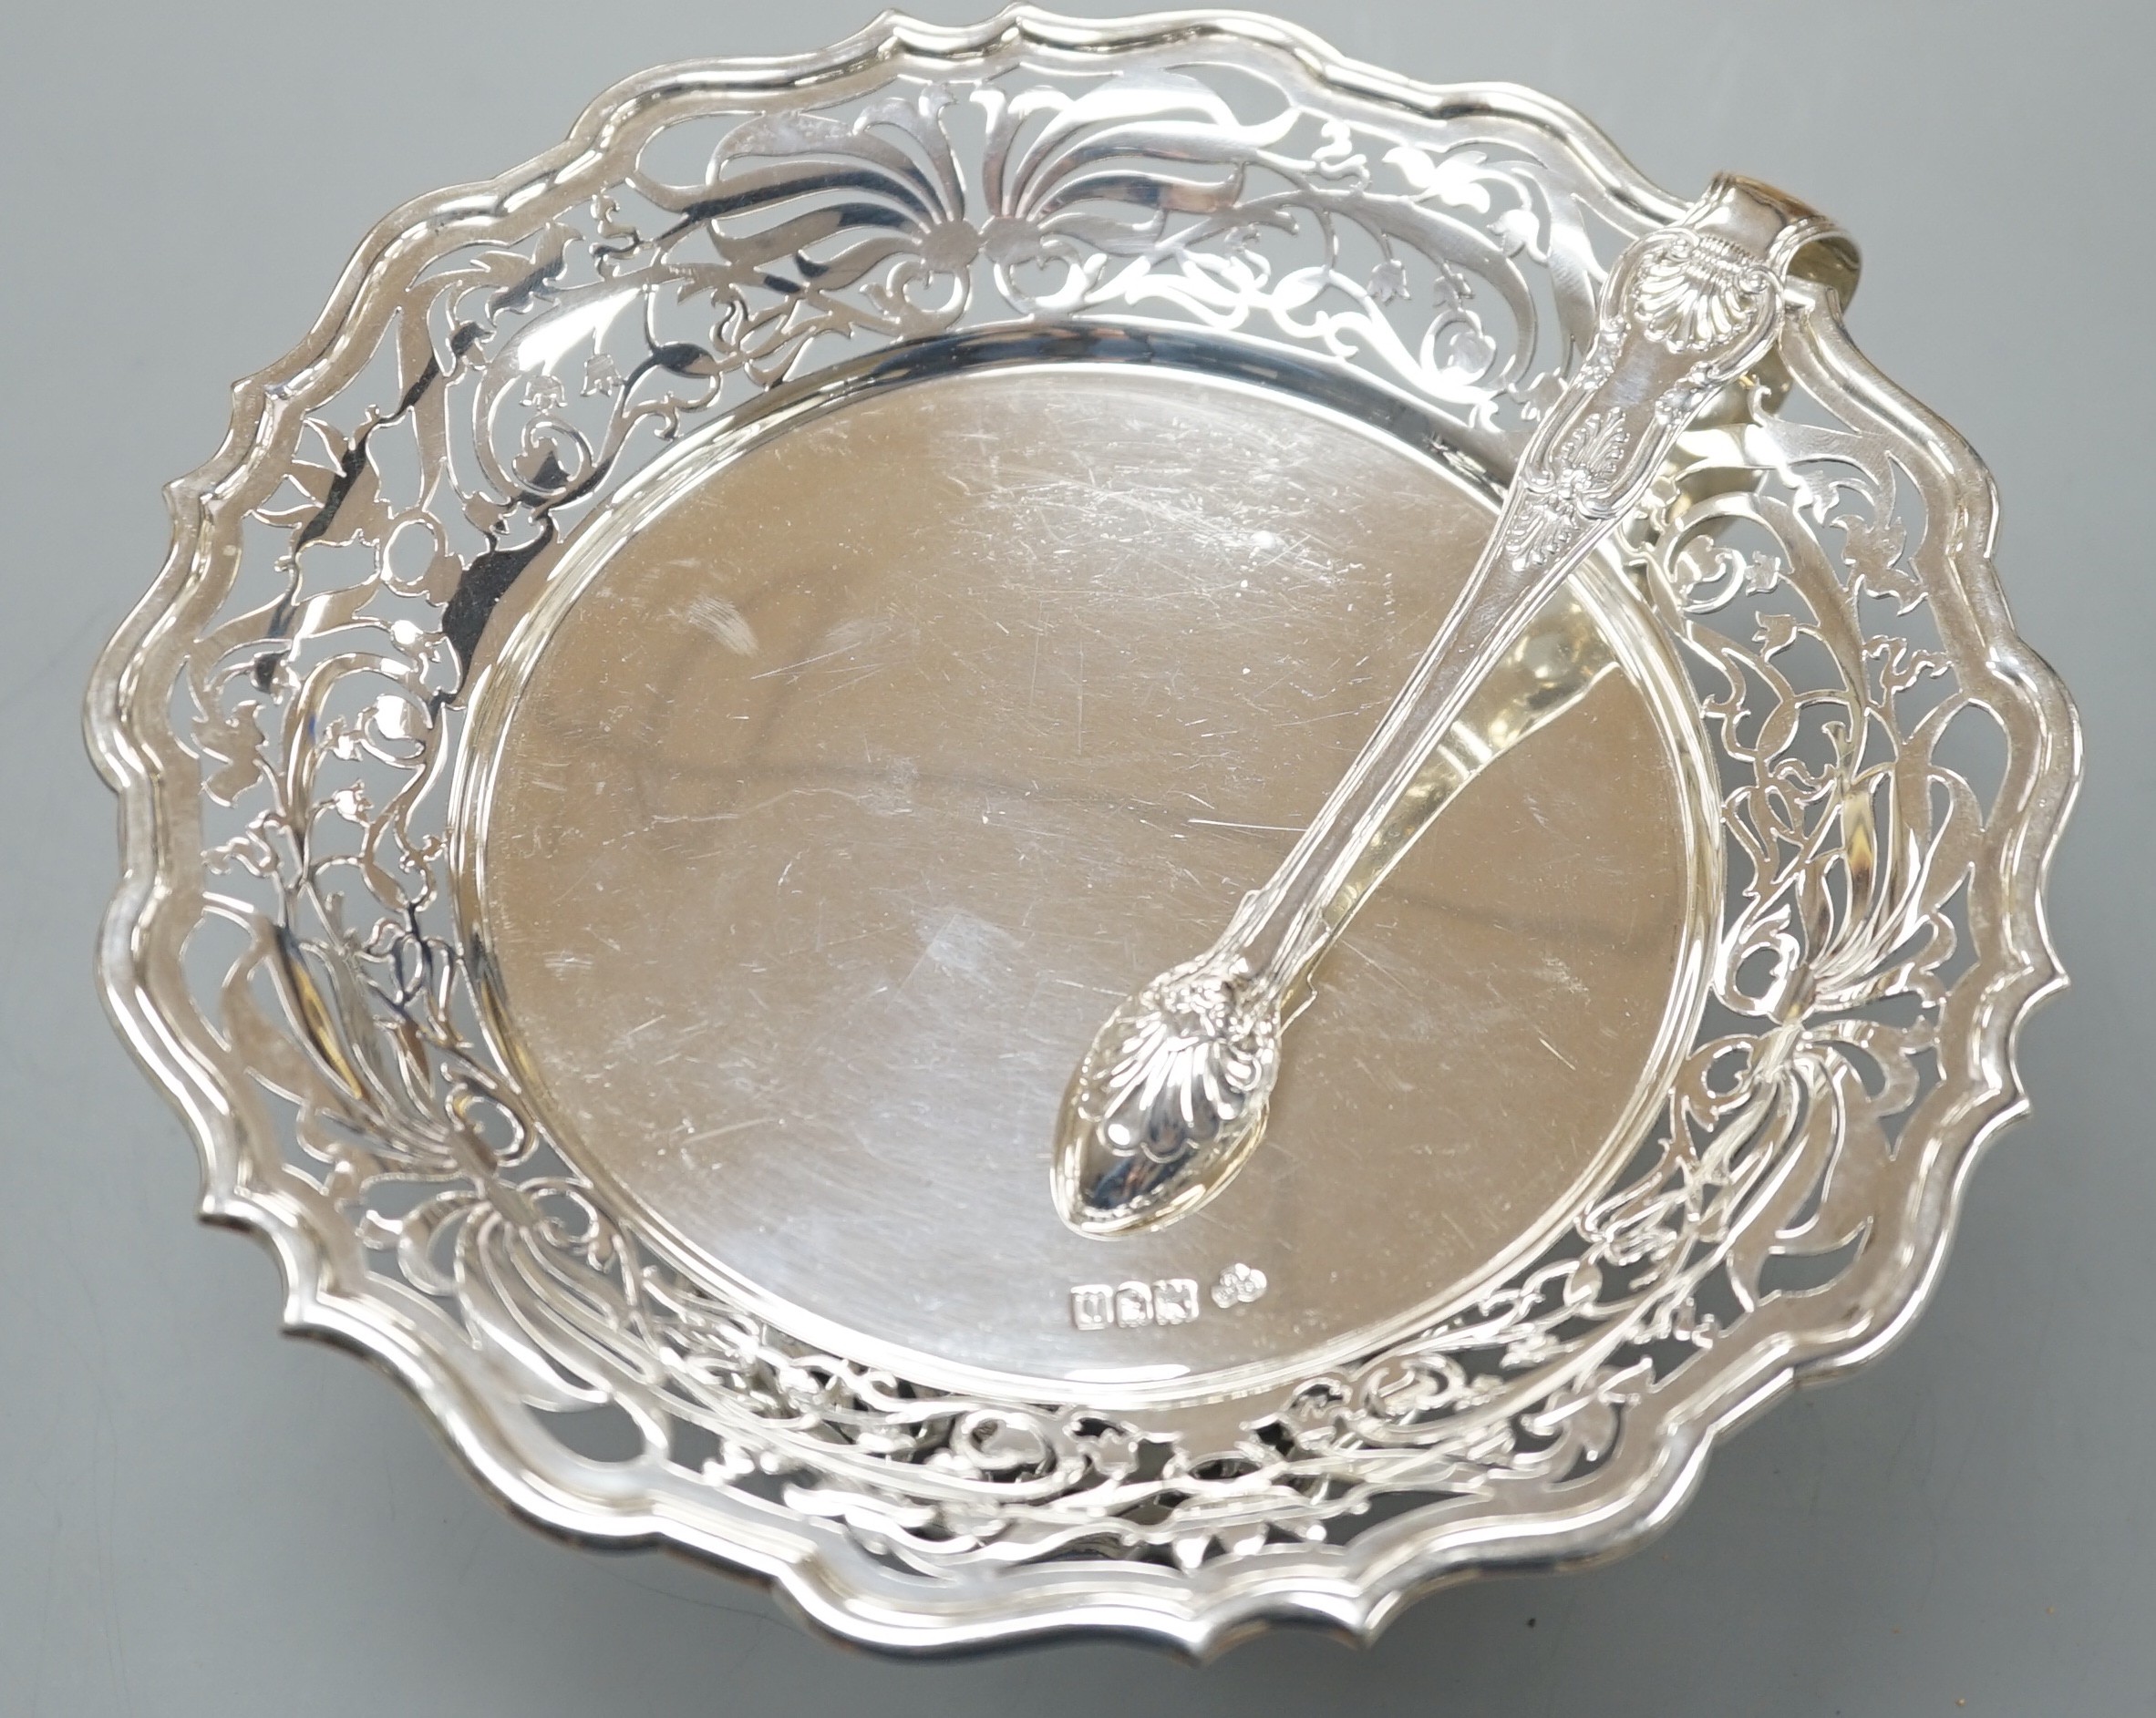 An Edwardian pierced silver tazza, by Goldsmiths & Silversmiths Co Ltd, London, 1908, 20.4cm and a pair of William IV silver Kings pattern sugar tongs, 15.5oz.